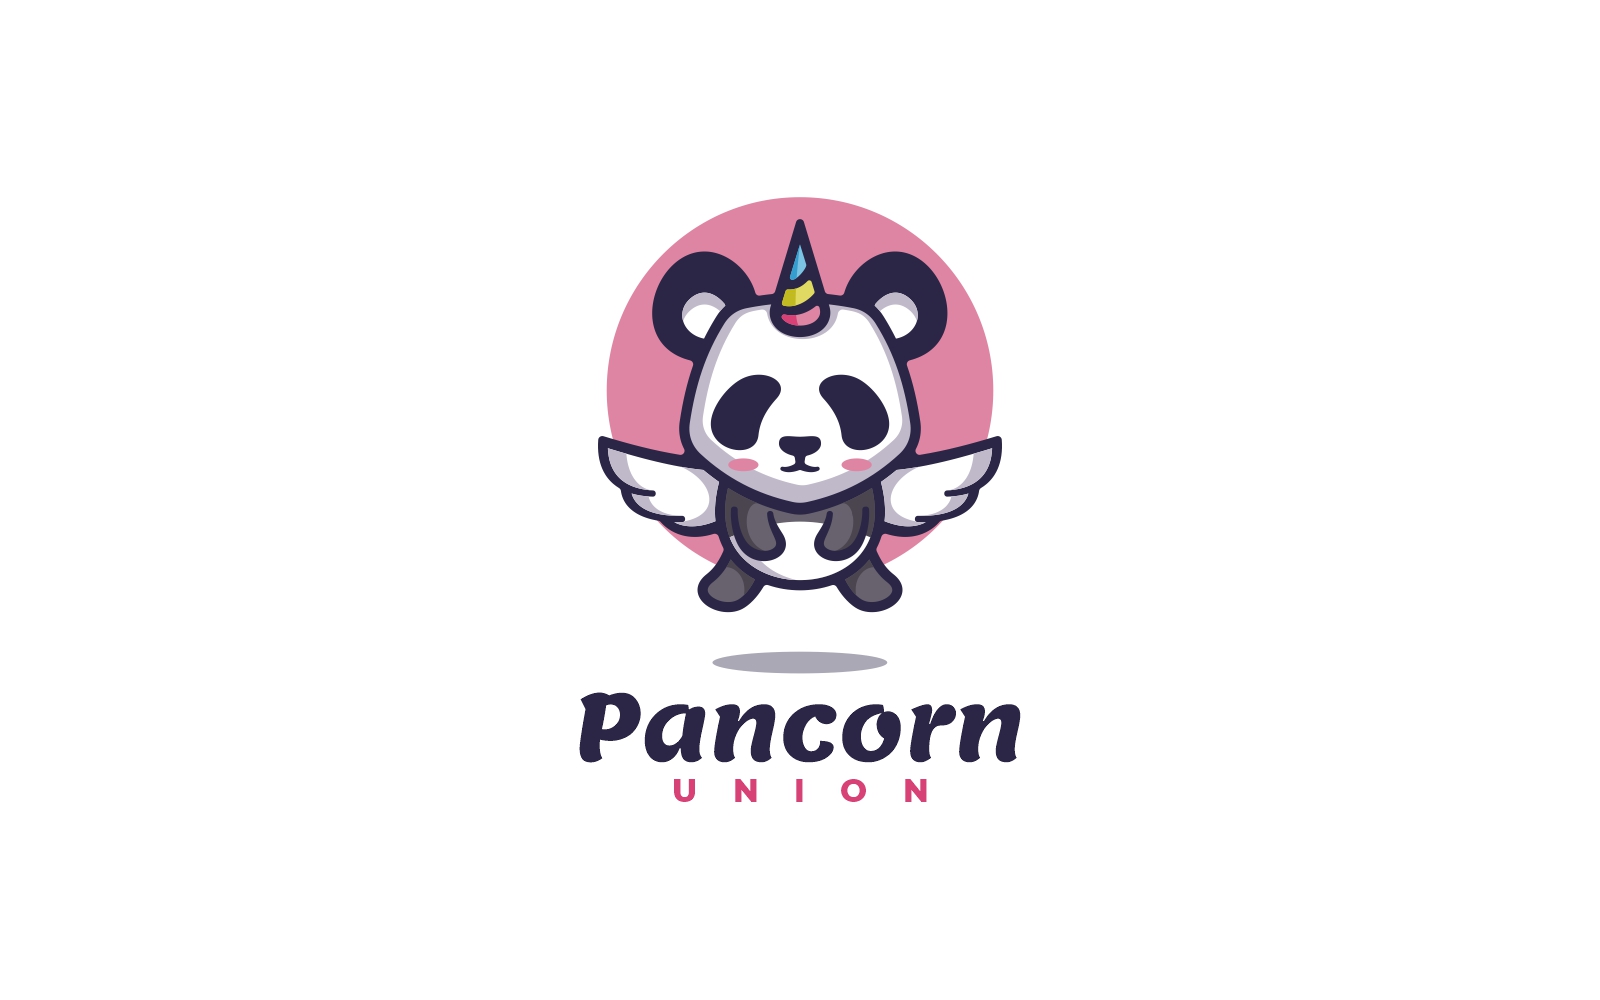 Panda Unicorn Cartoon Logo